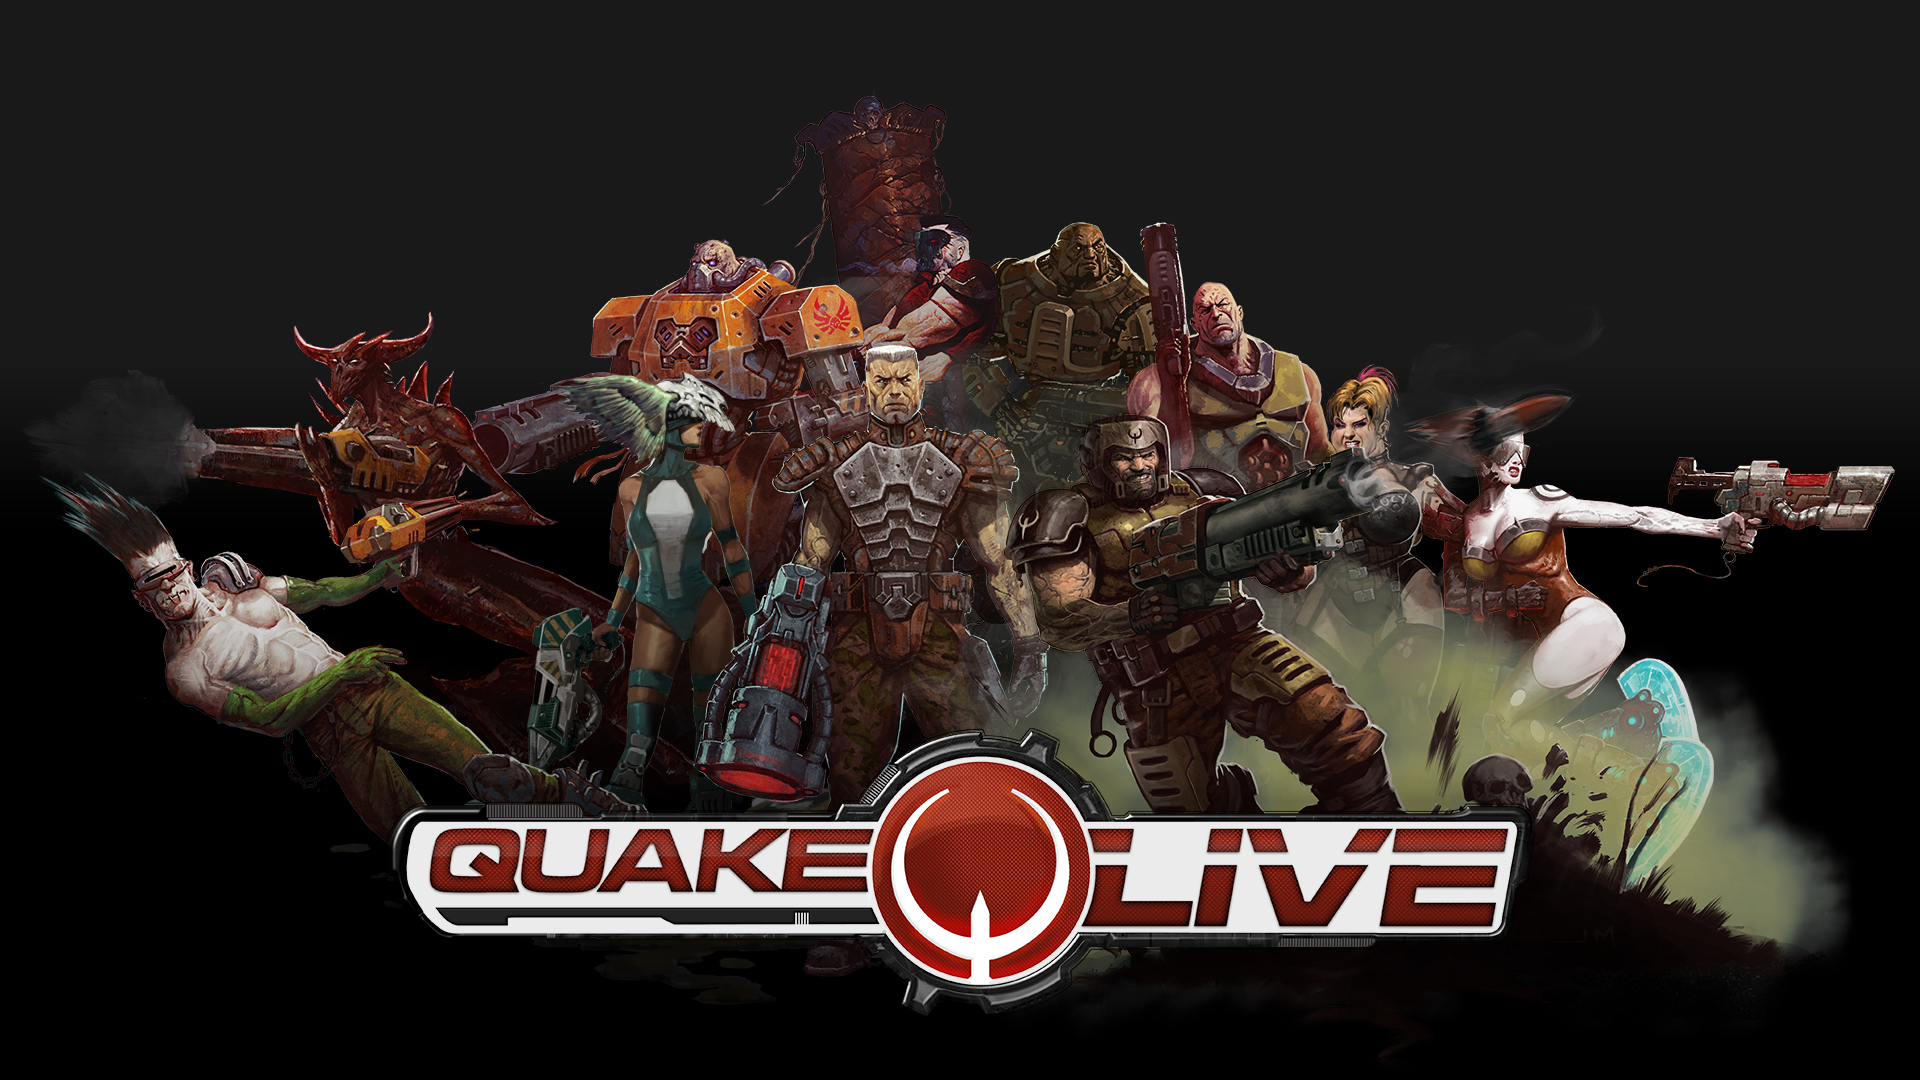 Quake Live Full Version Mobile Game